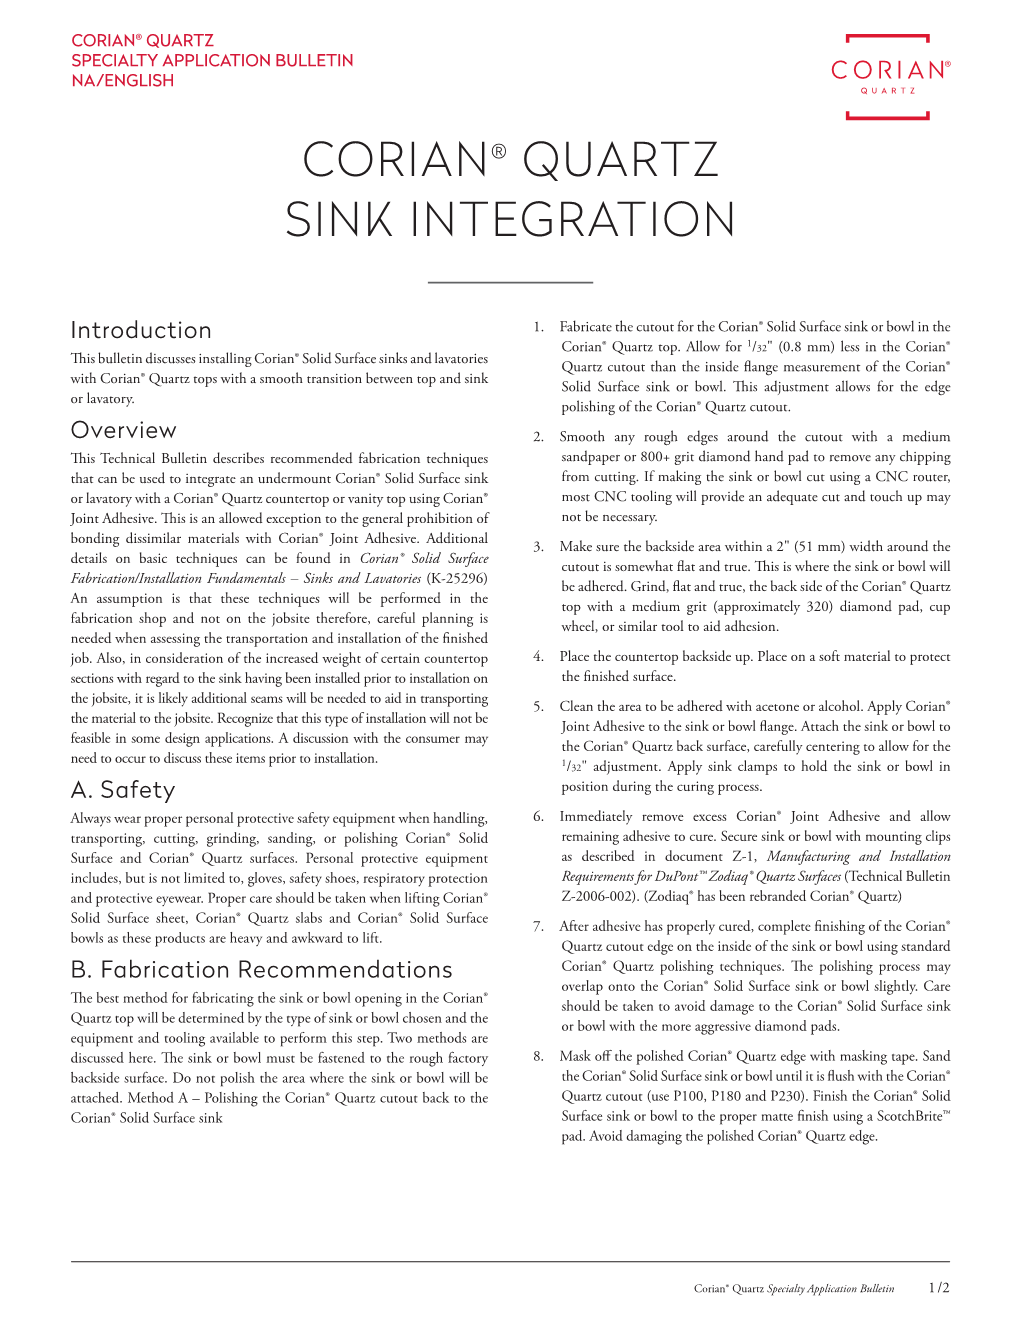 Corian® Quartz Sink Integration